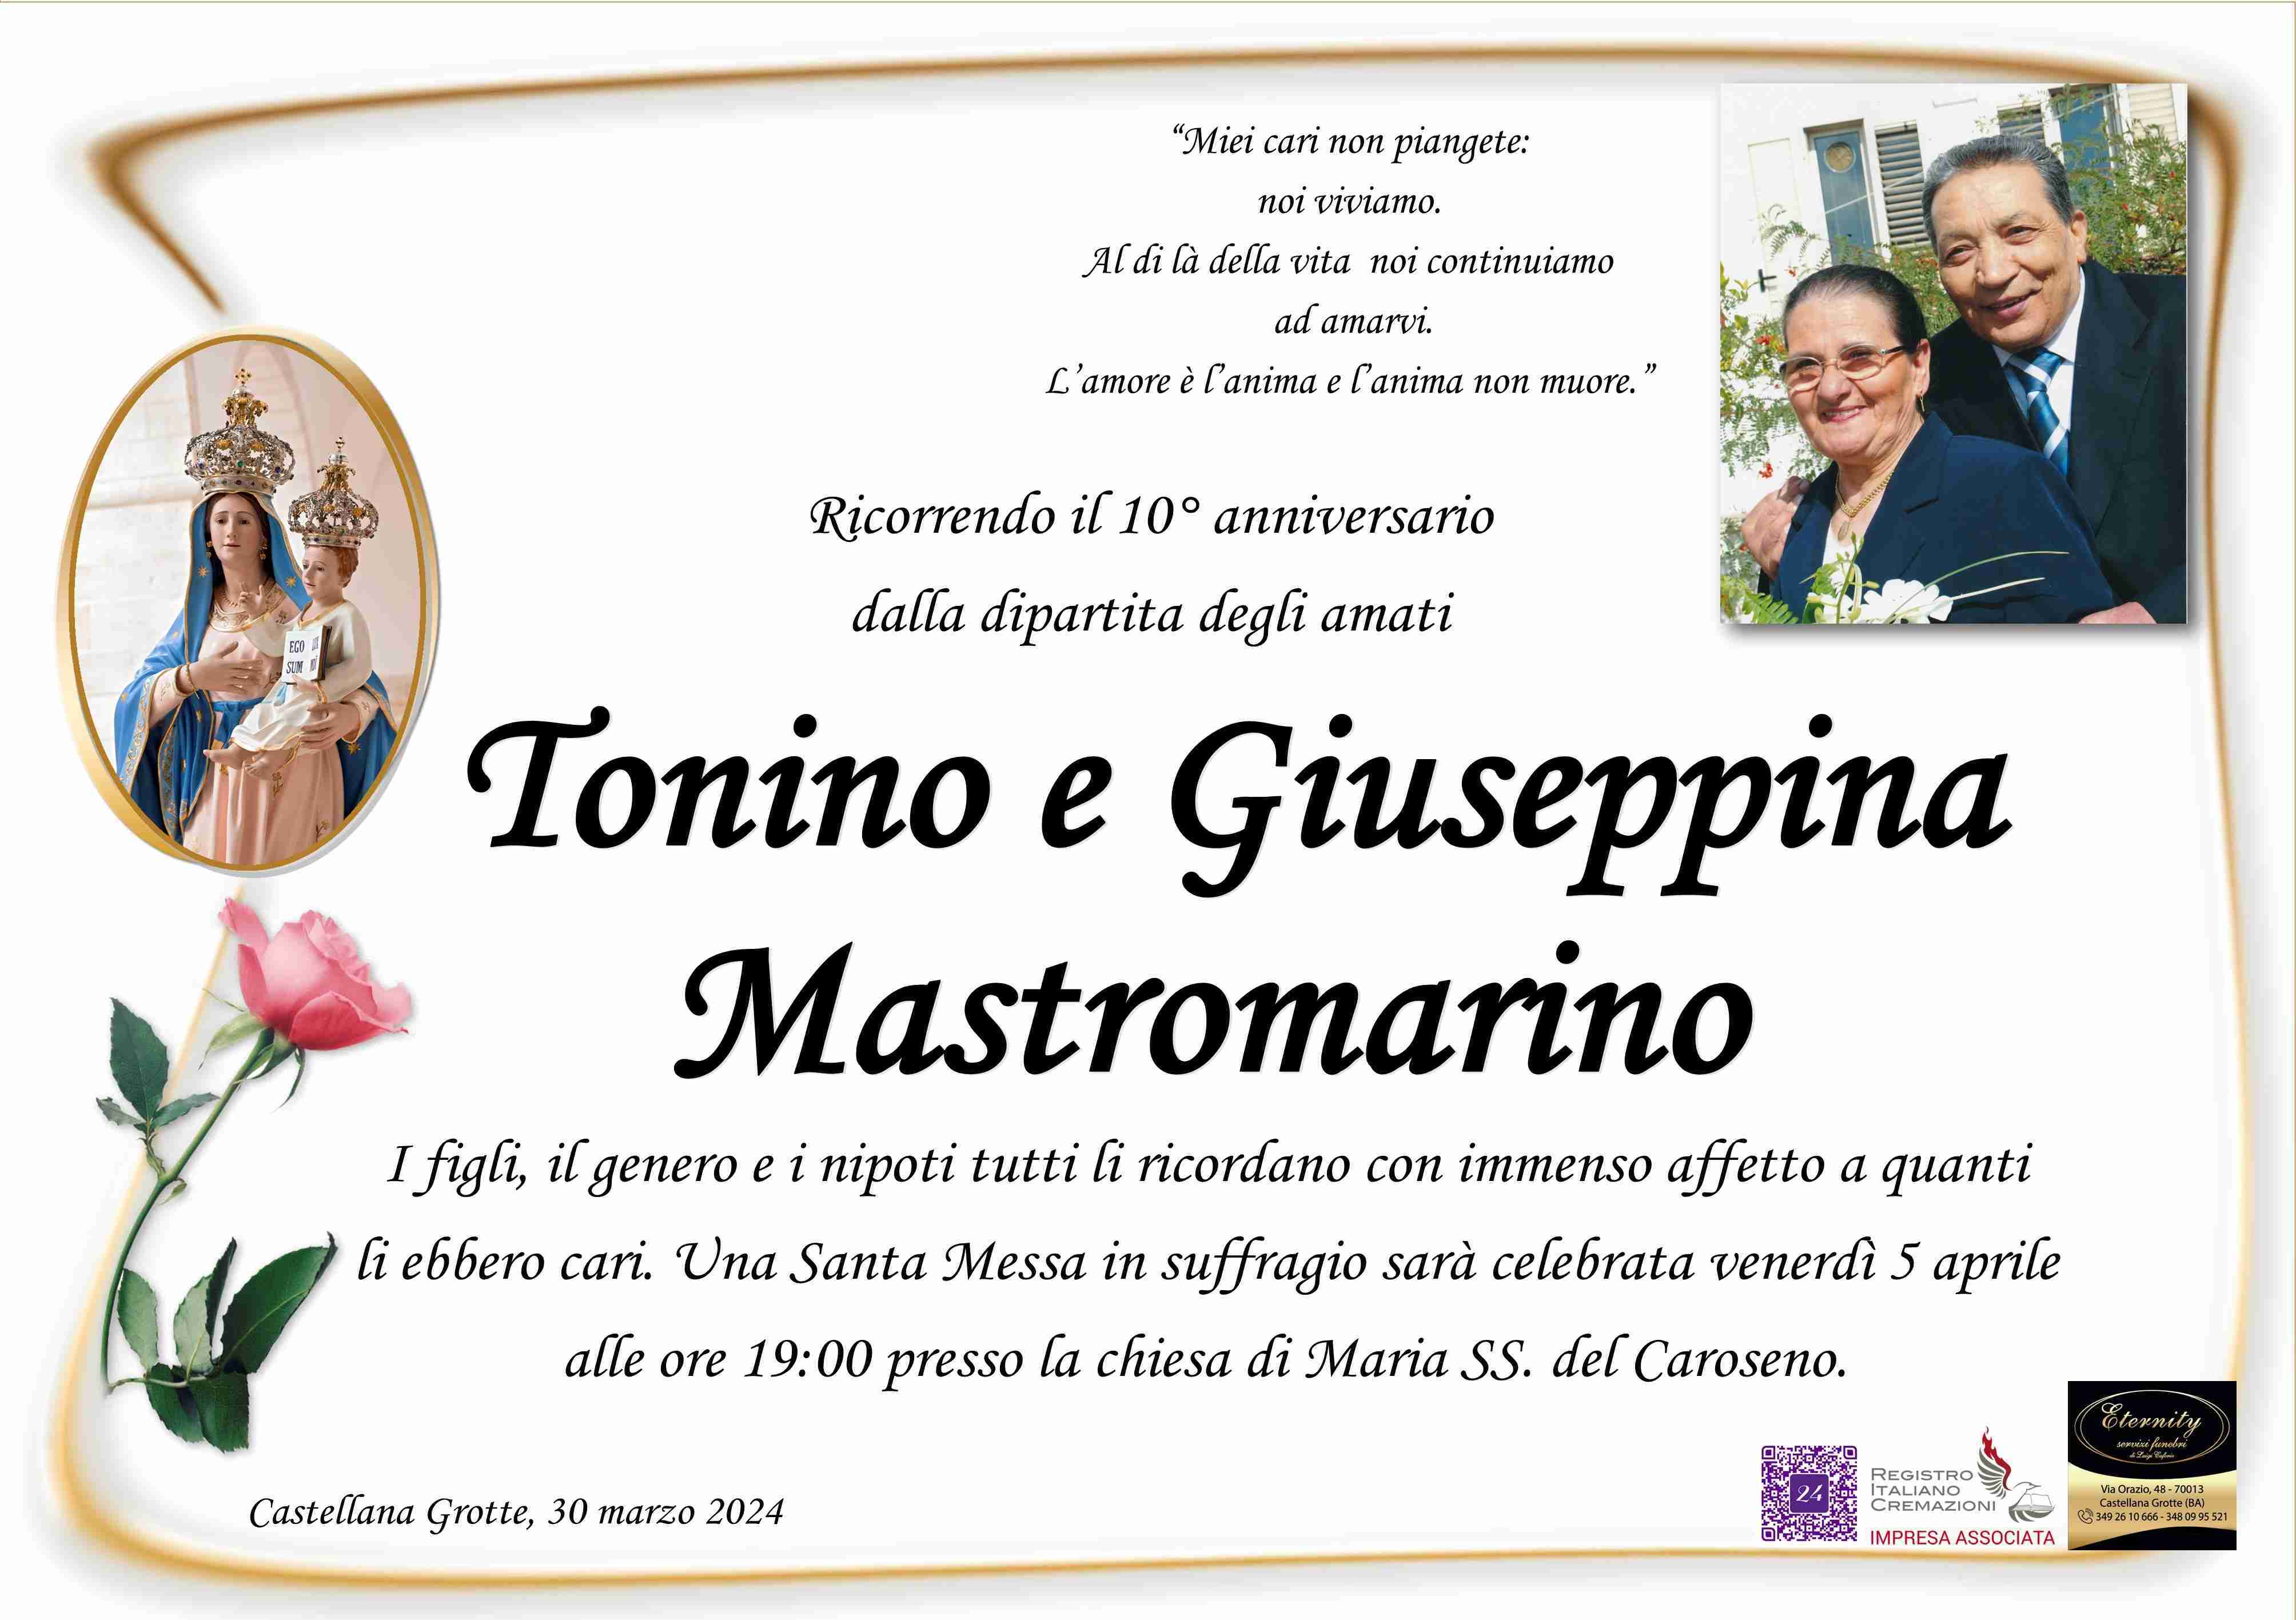 Tonino e Giuseppina Mastromarino